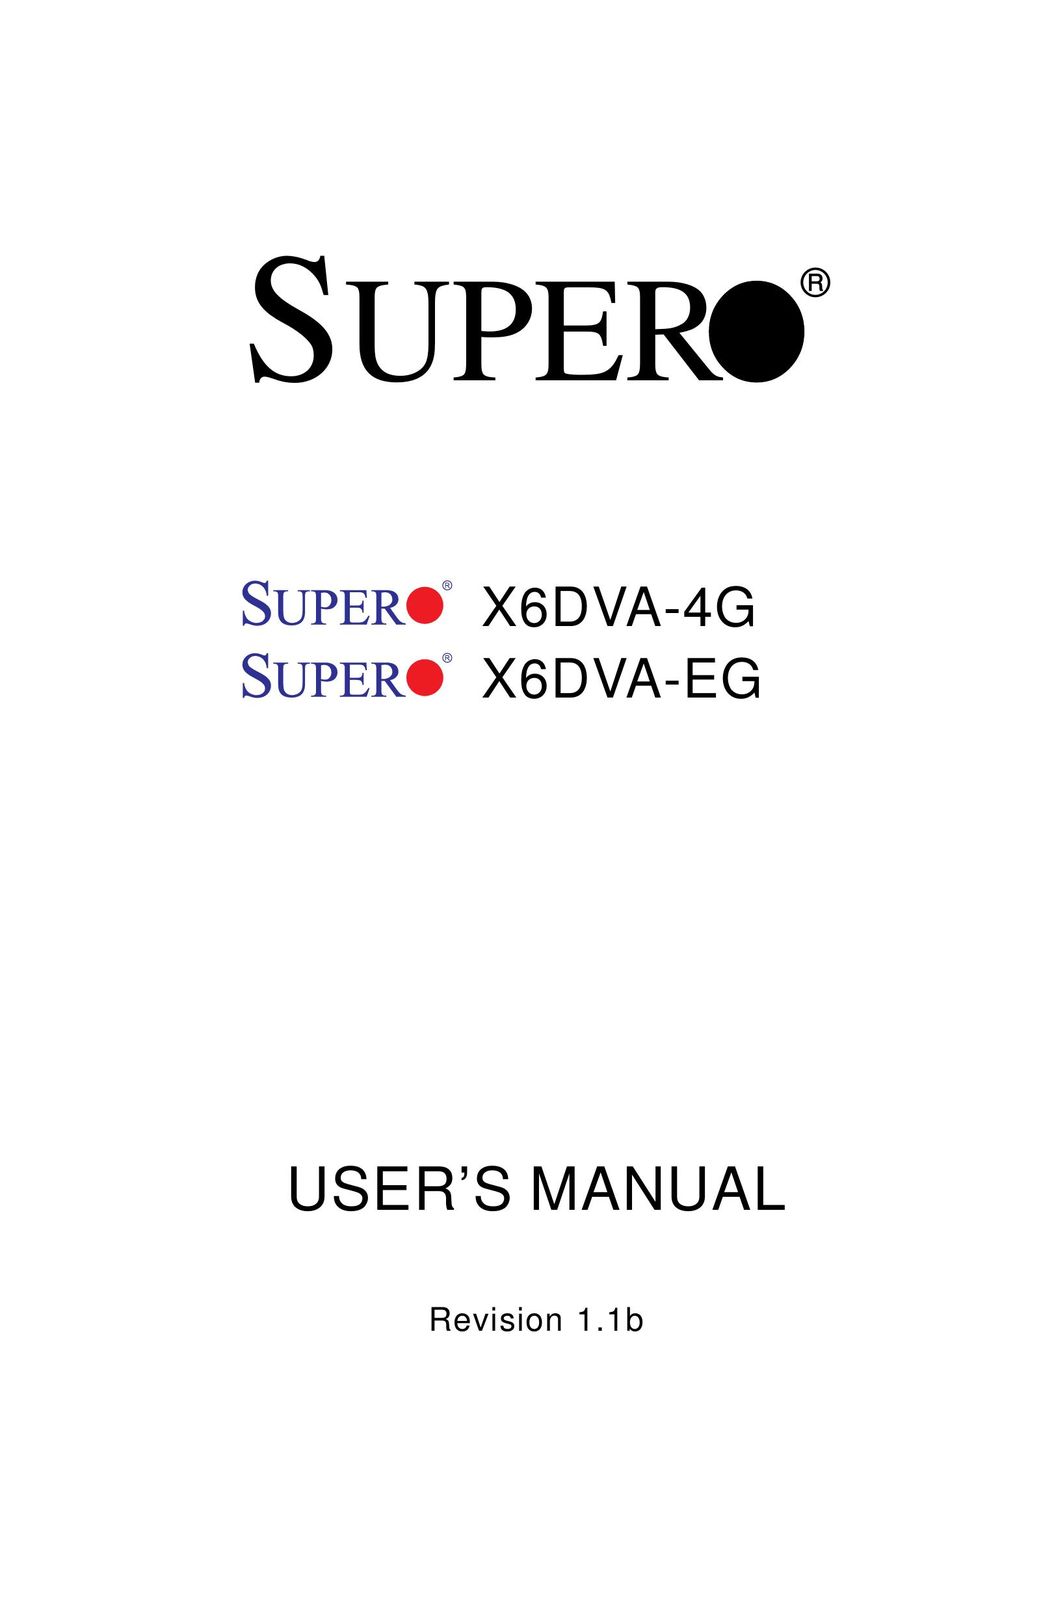 American Megatrends X6DVA-4G Network Card User Manual